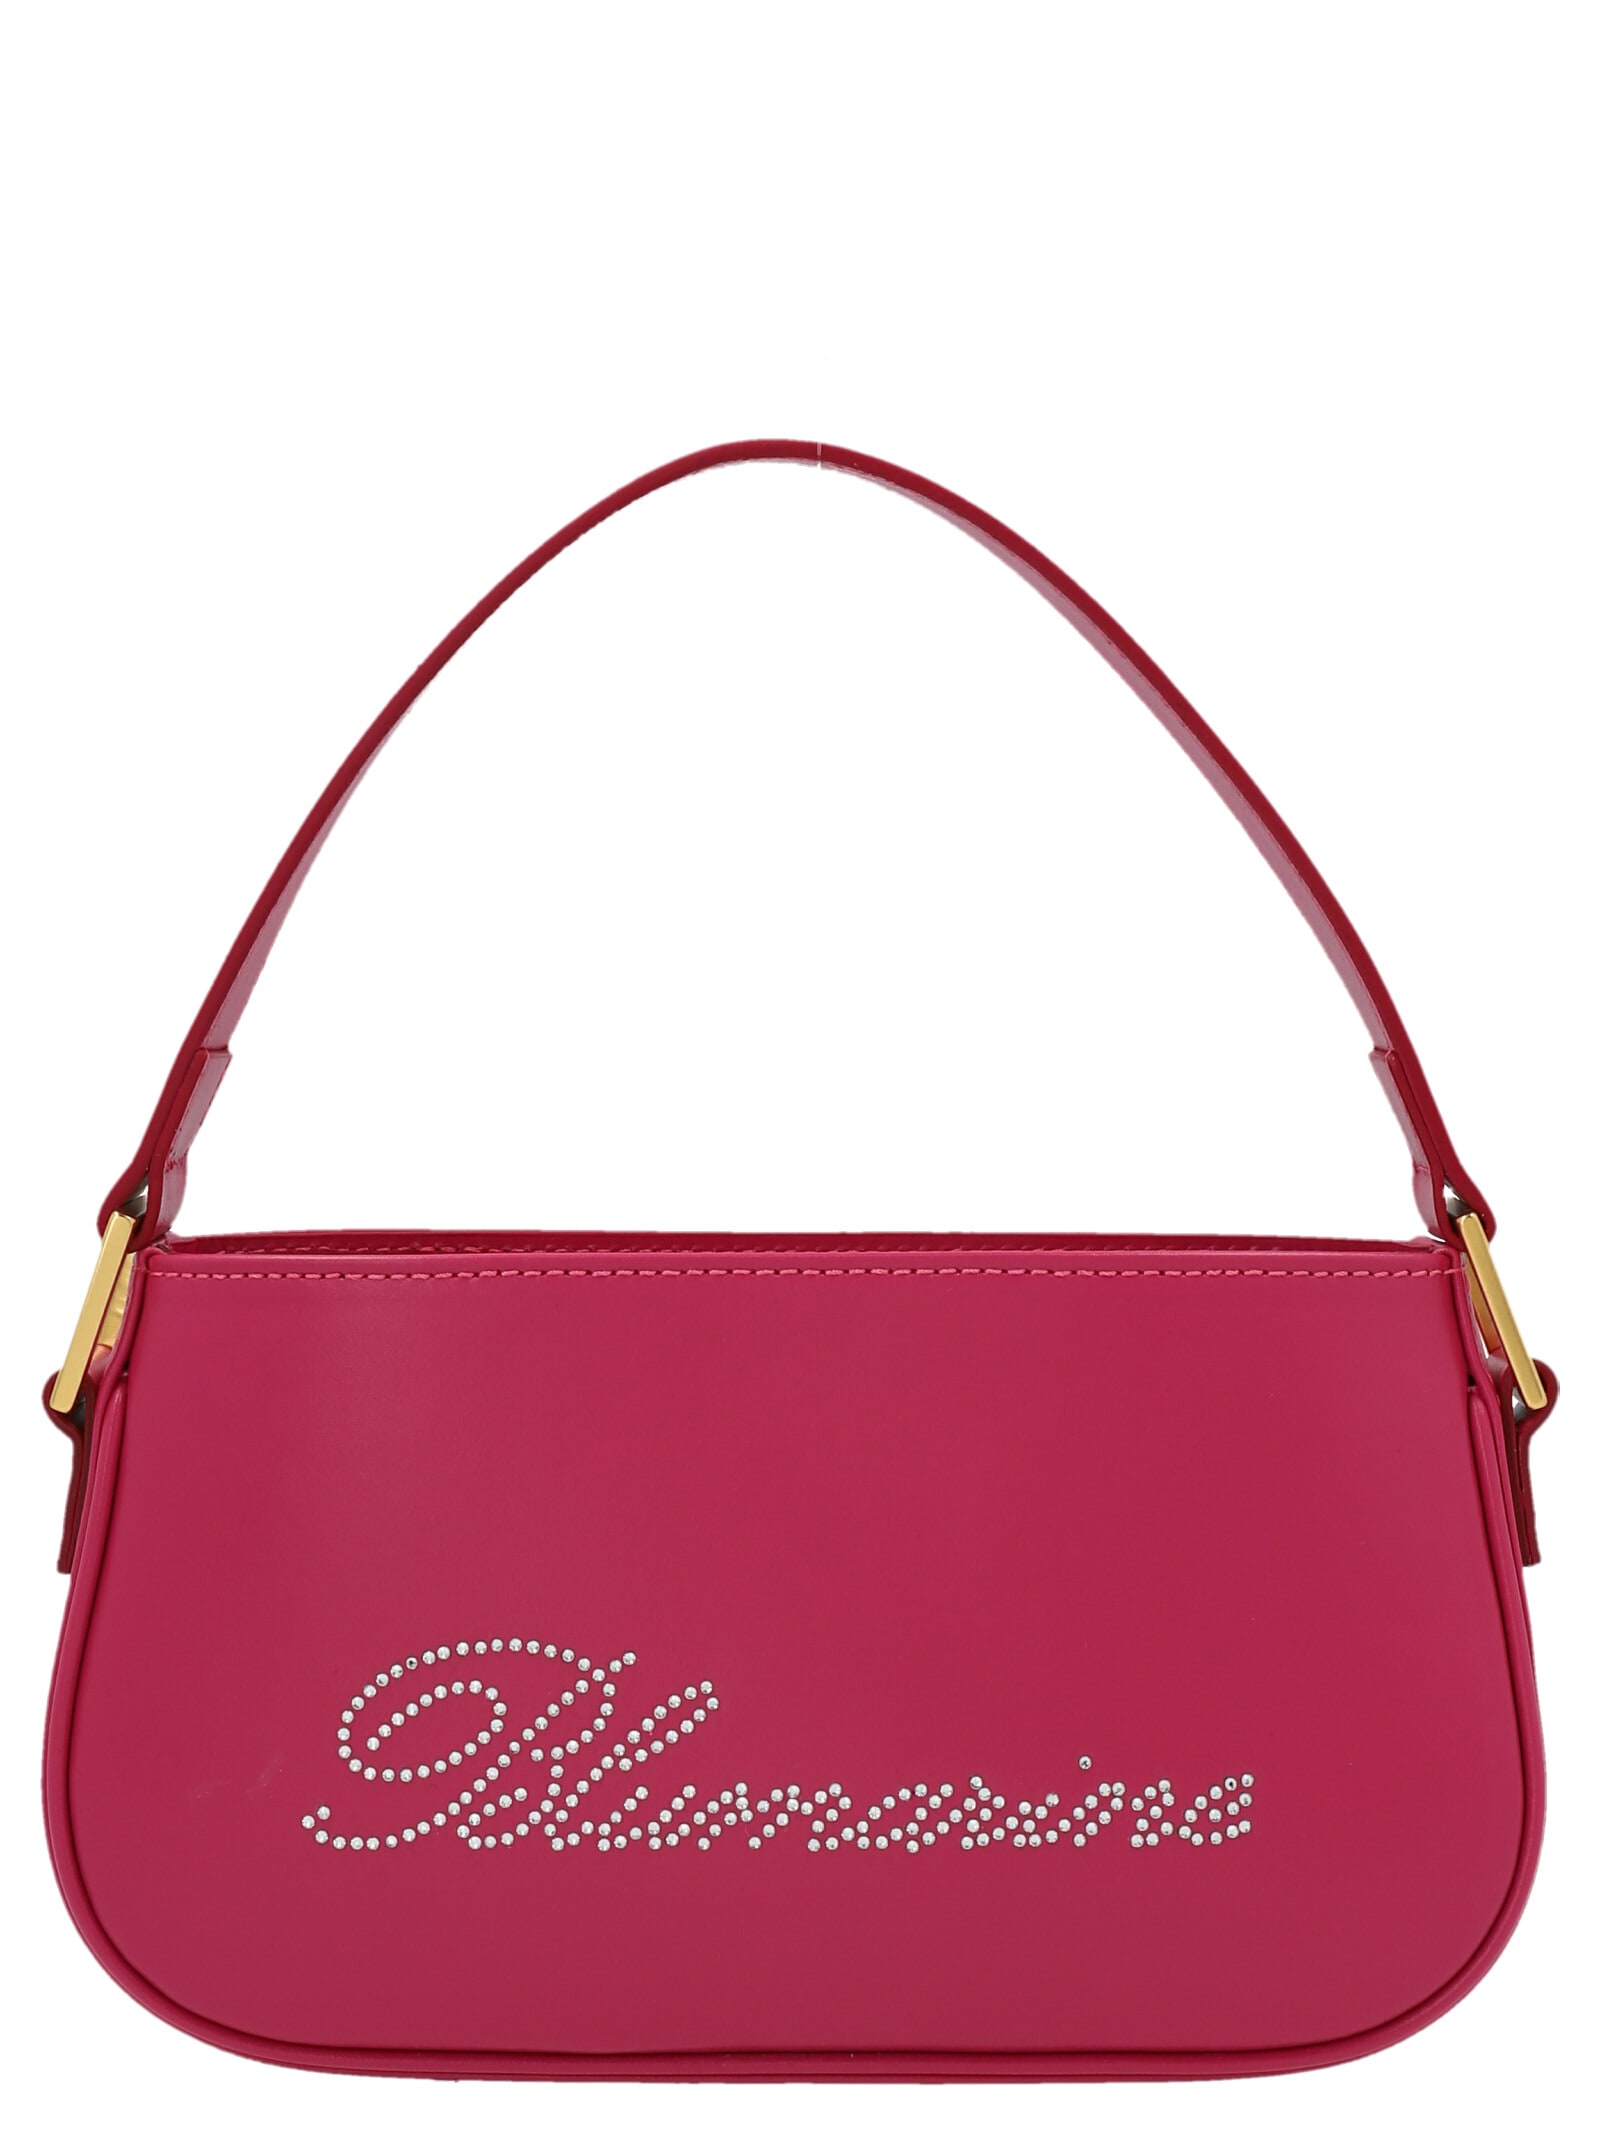 Blumarine Logo Handbag